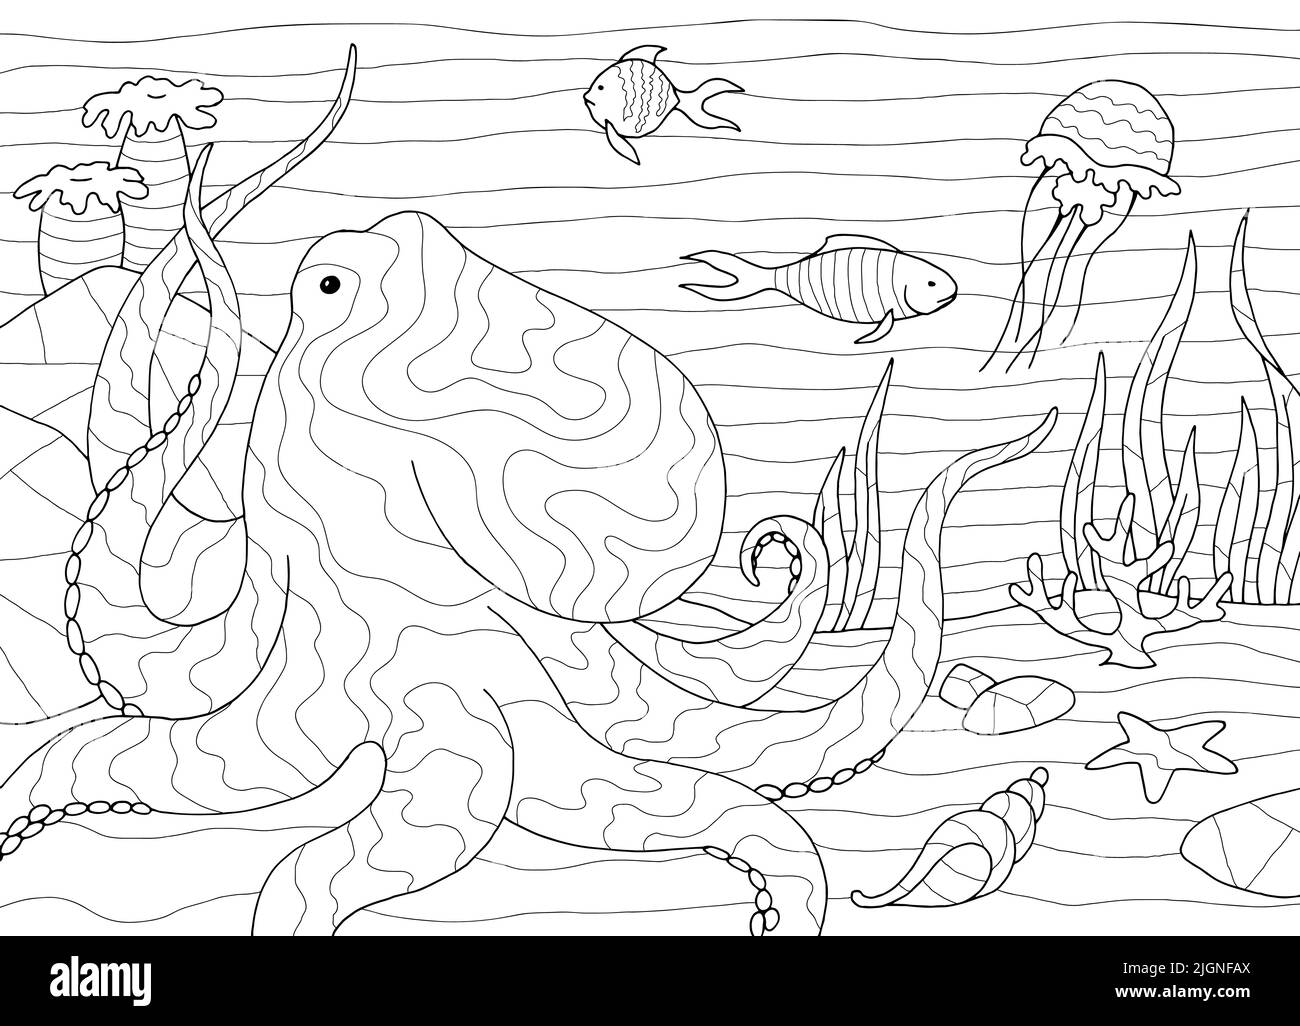 Octopus Färbung Unterwasser Grafik Meer schwarz weiß Skizze Illustration Vektor Stock Vektor